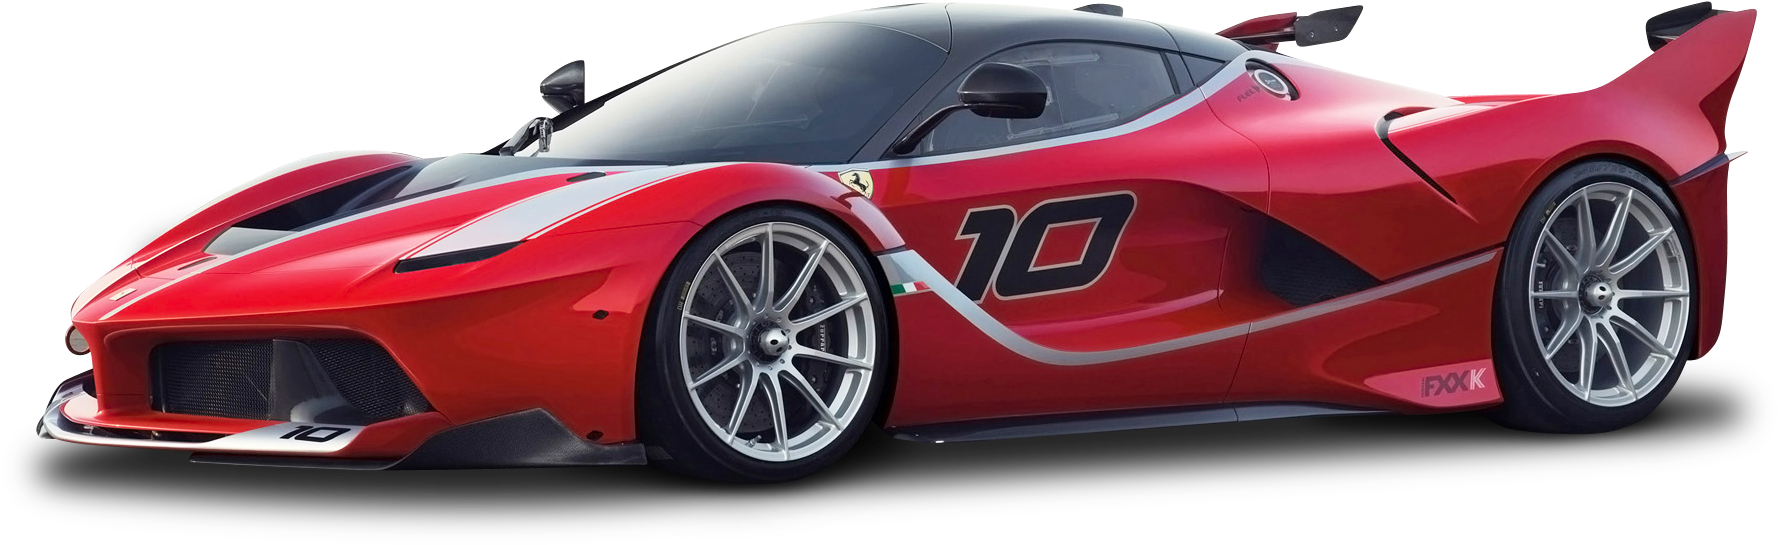 Red Ferrari Race Car Number10